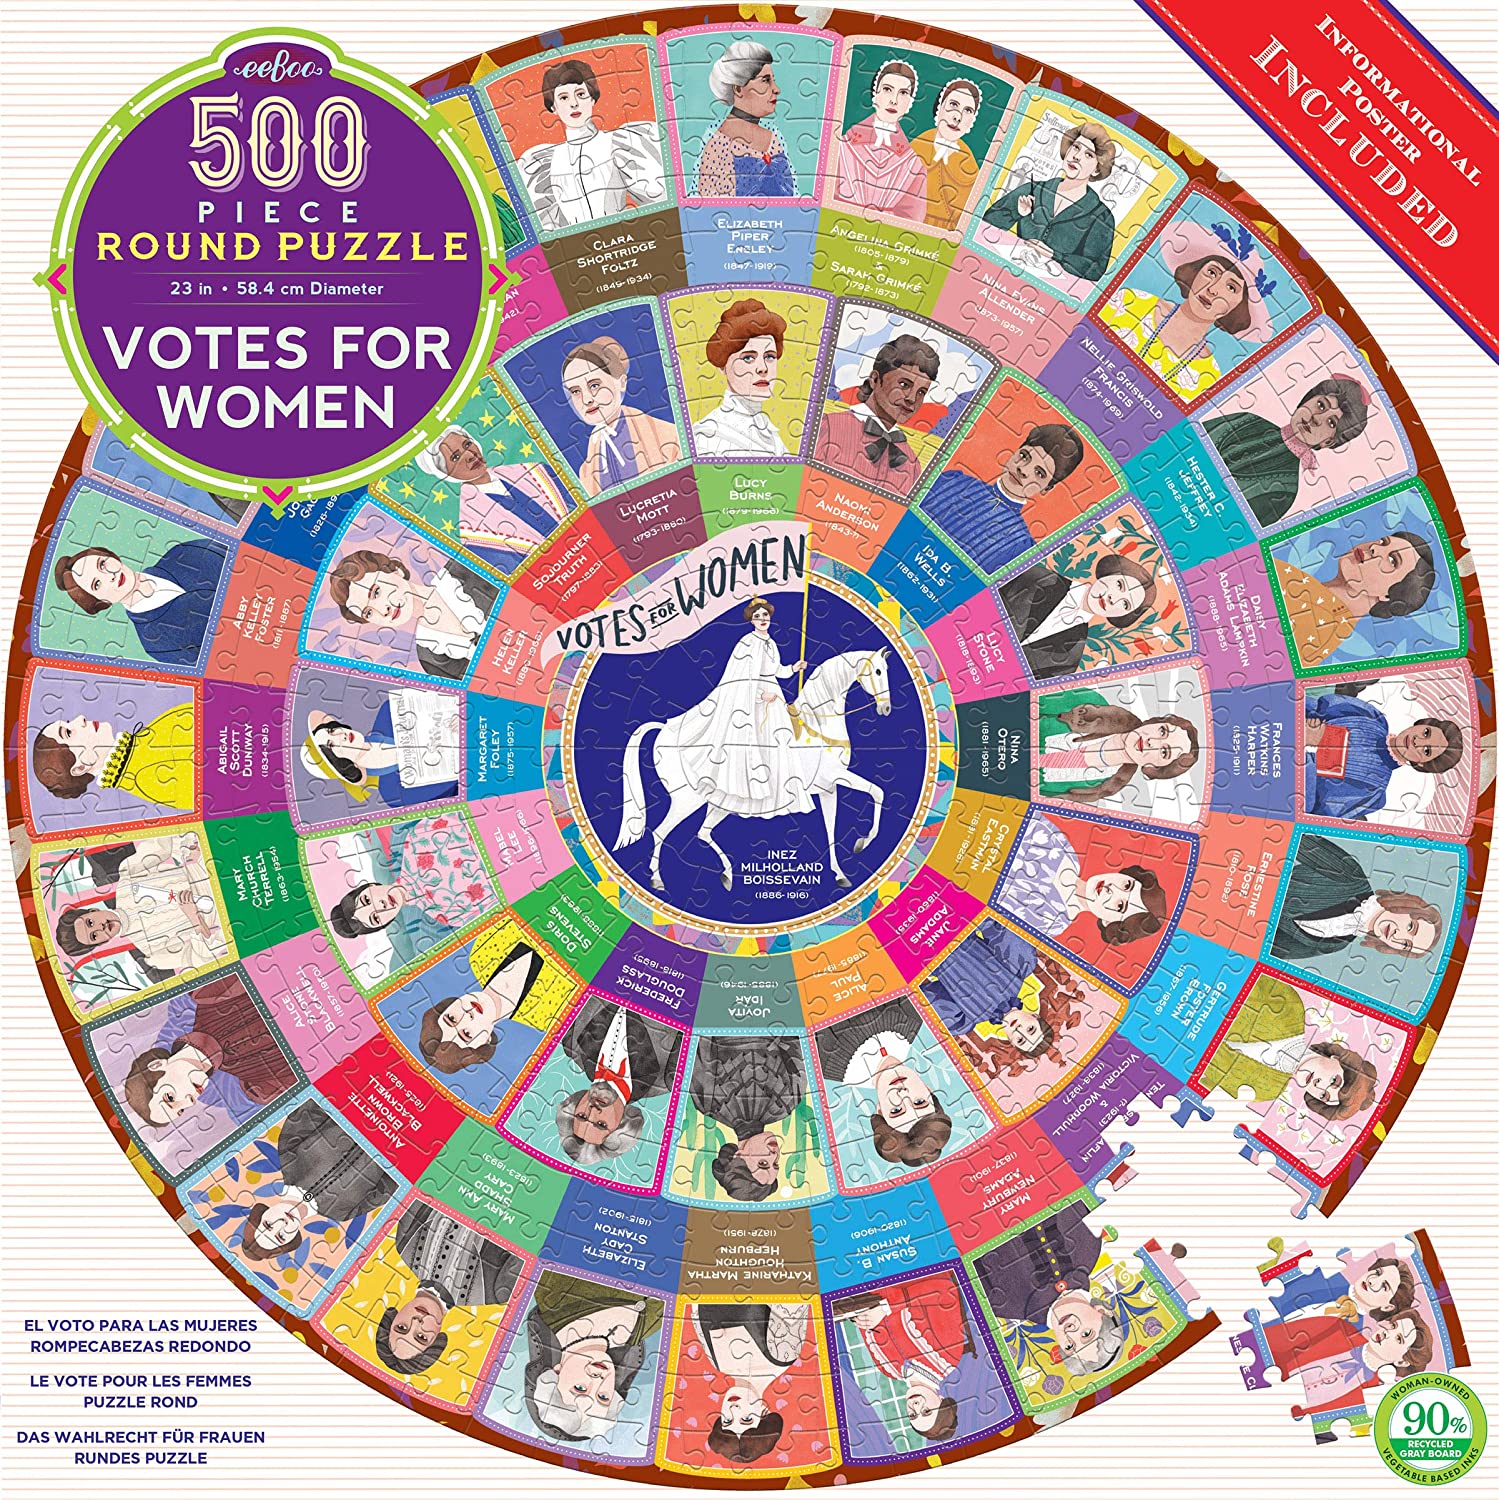 Votes for Women 500 round puzzle